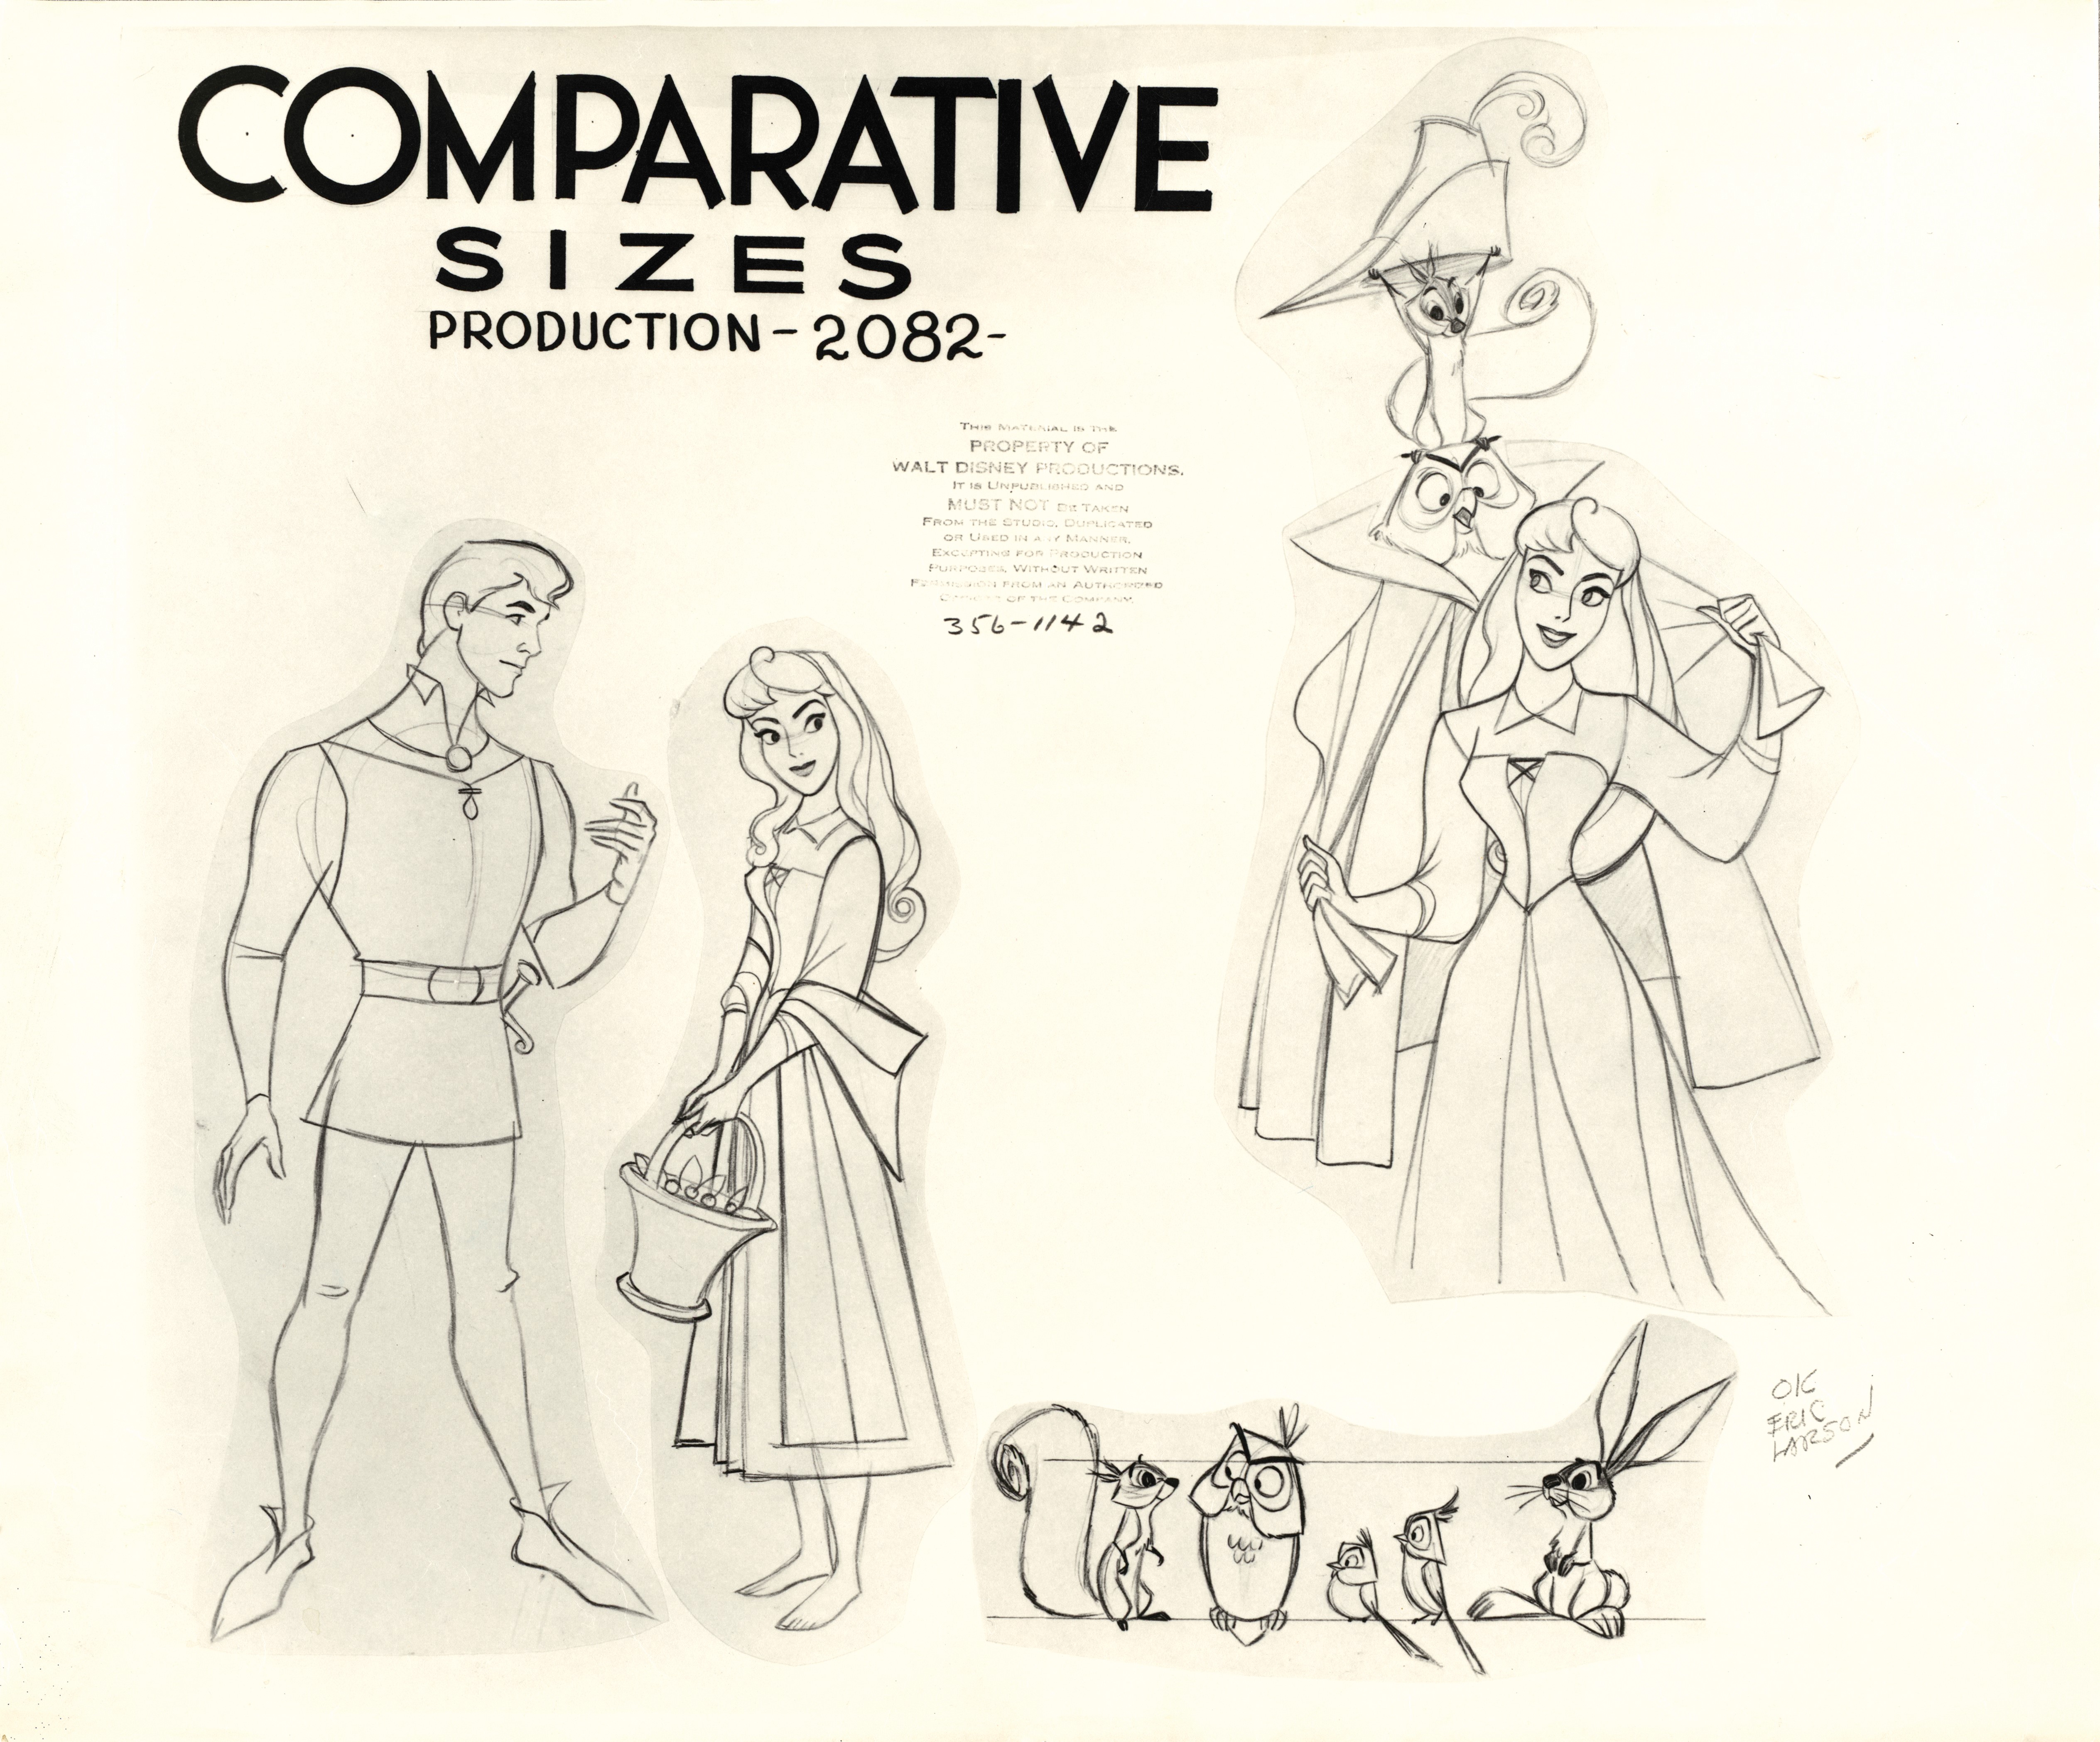 1959) United States Disney Original Production Drawings - Sleeping